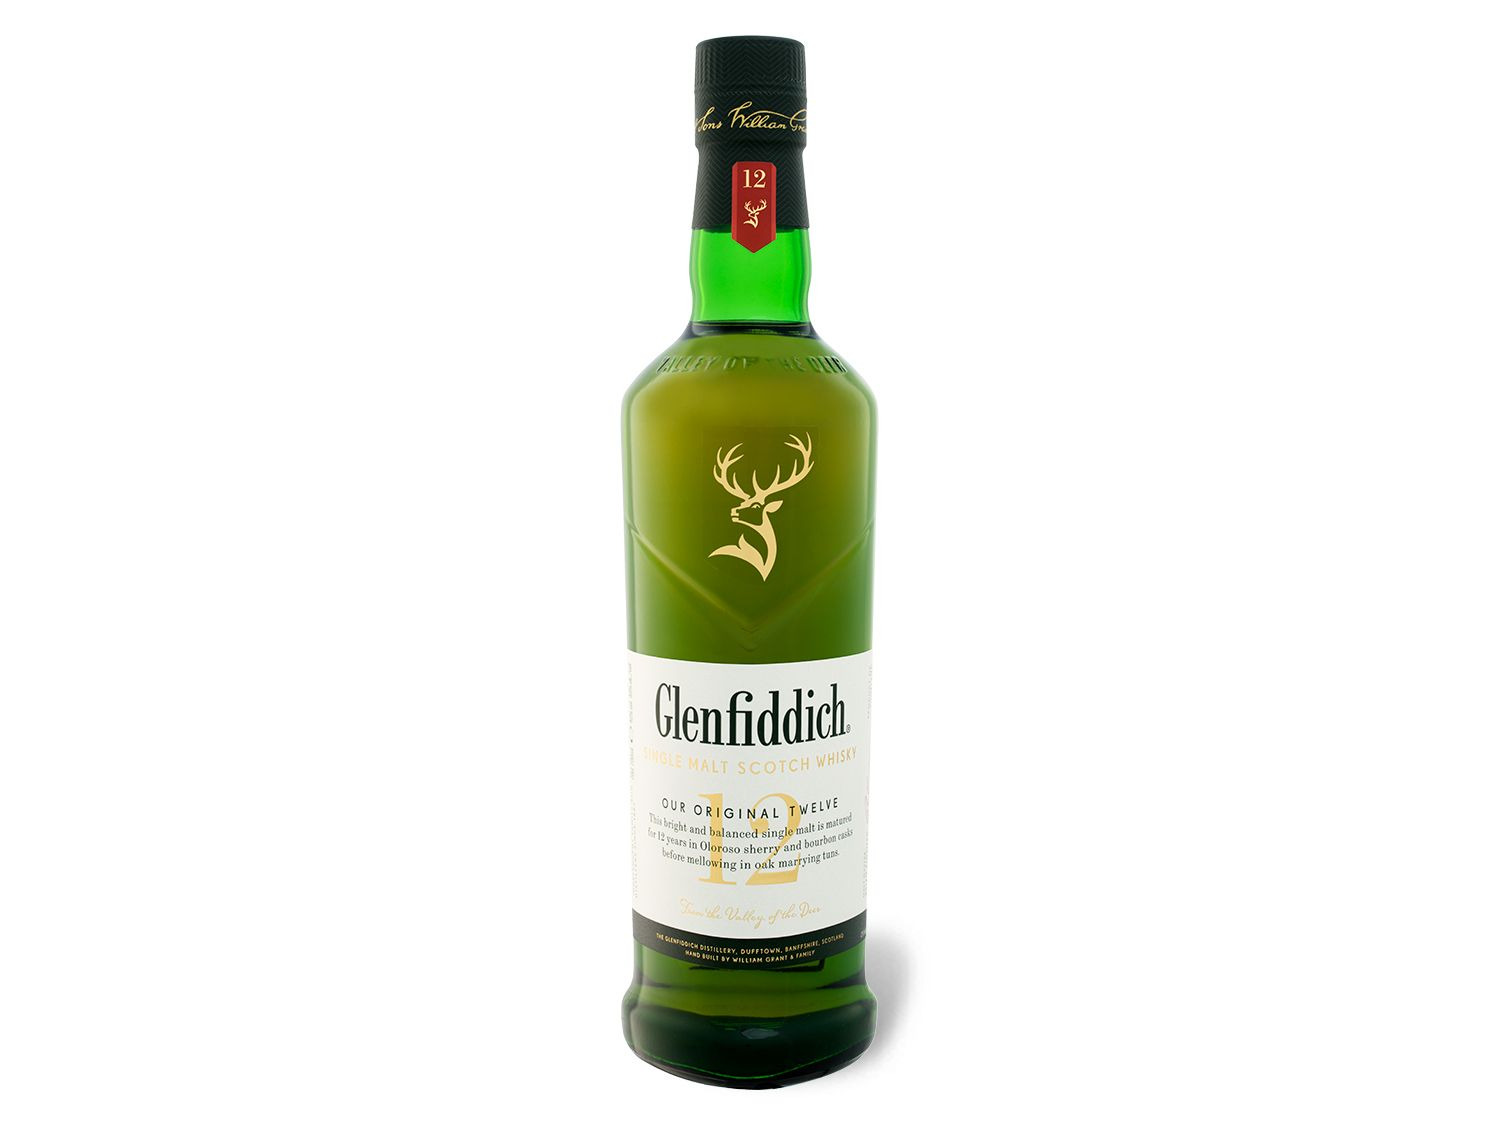 Glenfiddich Signature Scotch Whis… Speyside Single Malt